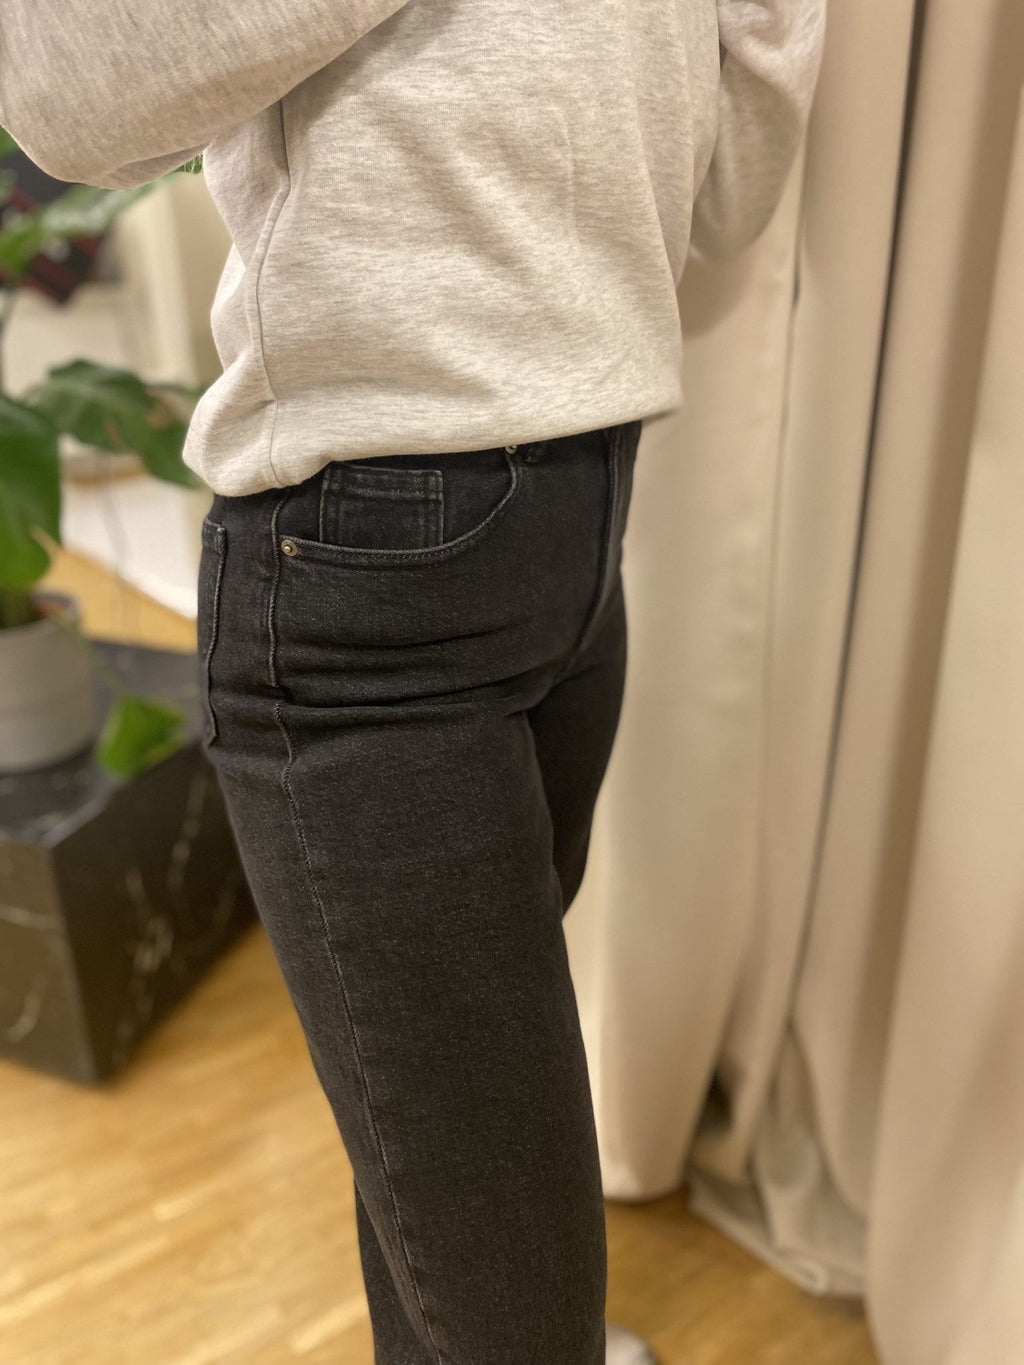 Jeans juicy (cos leathan) - denim dubh